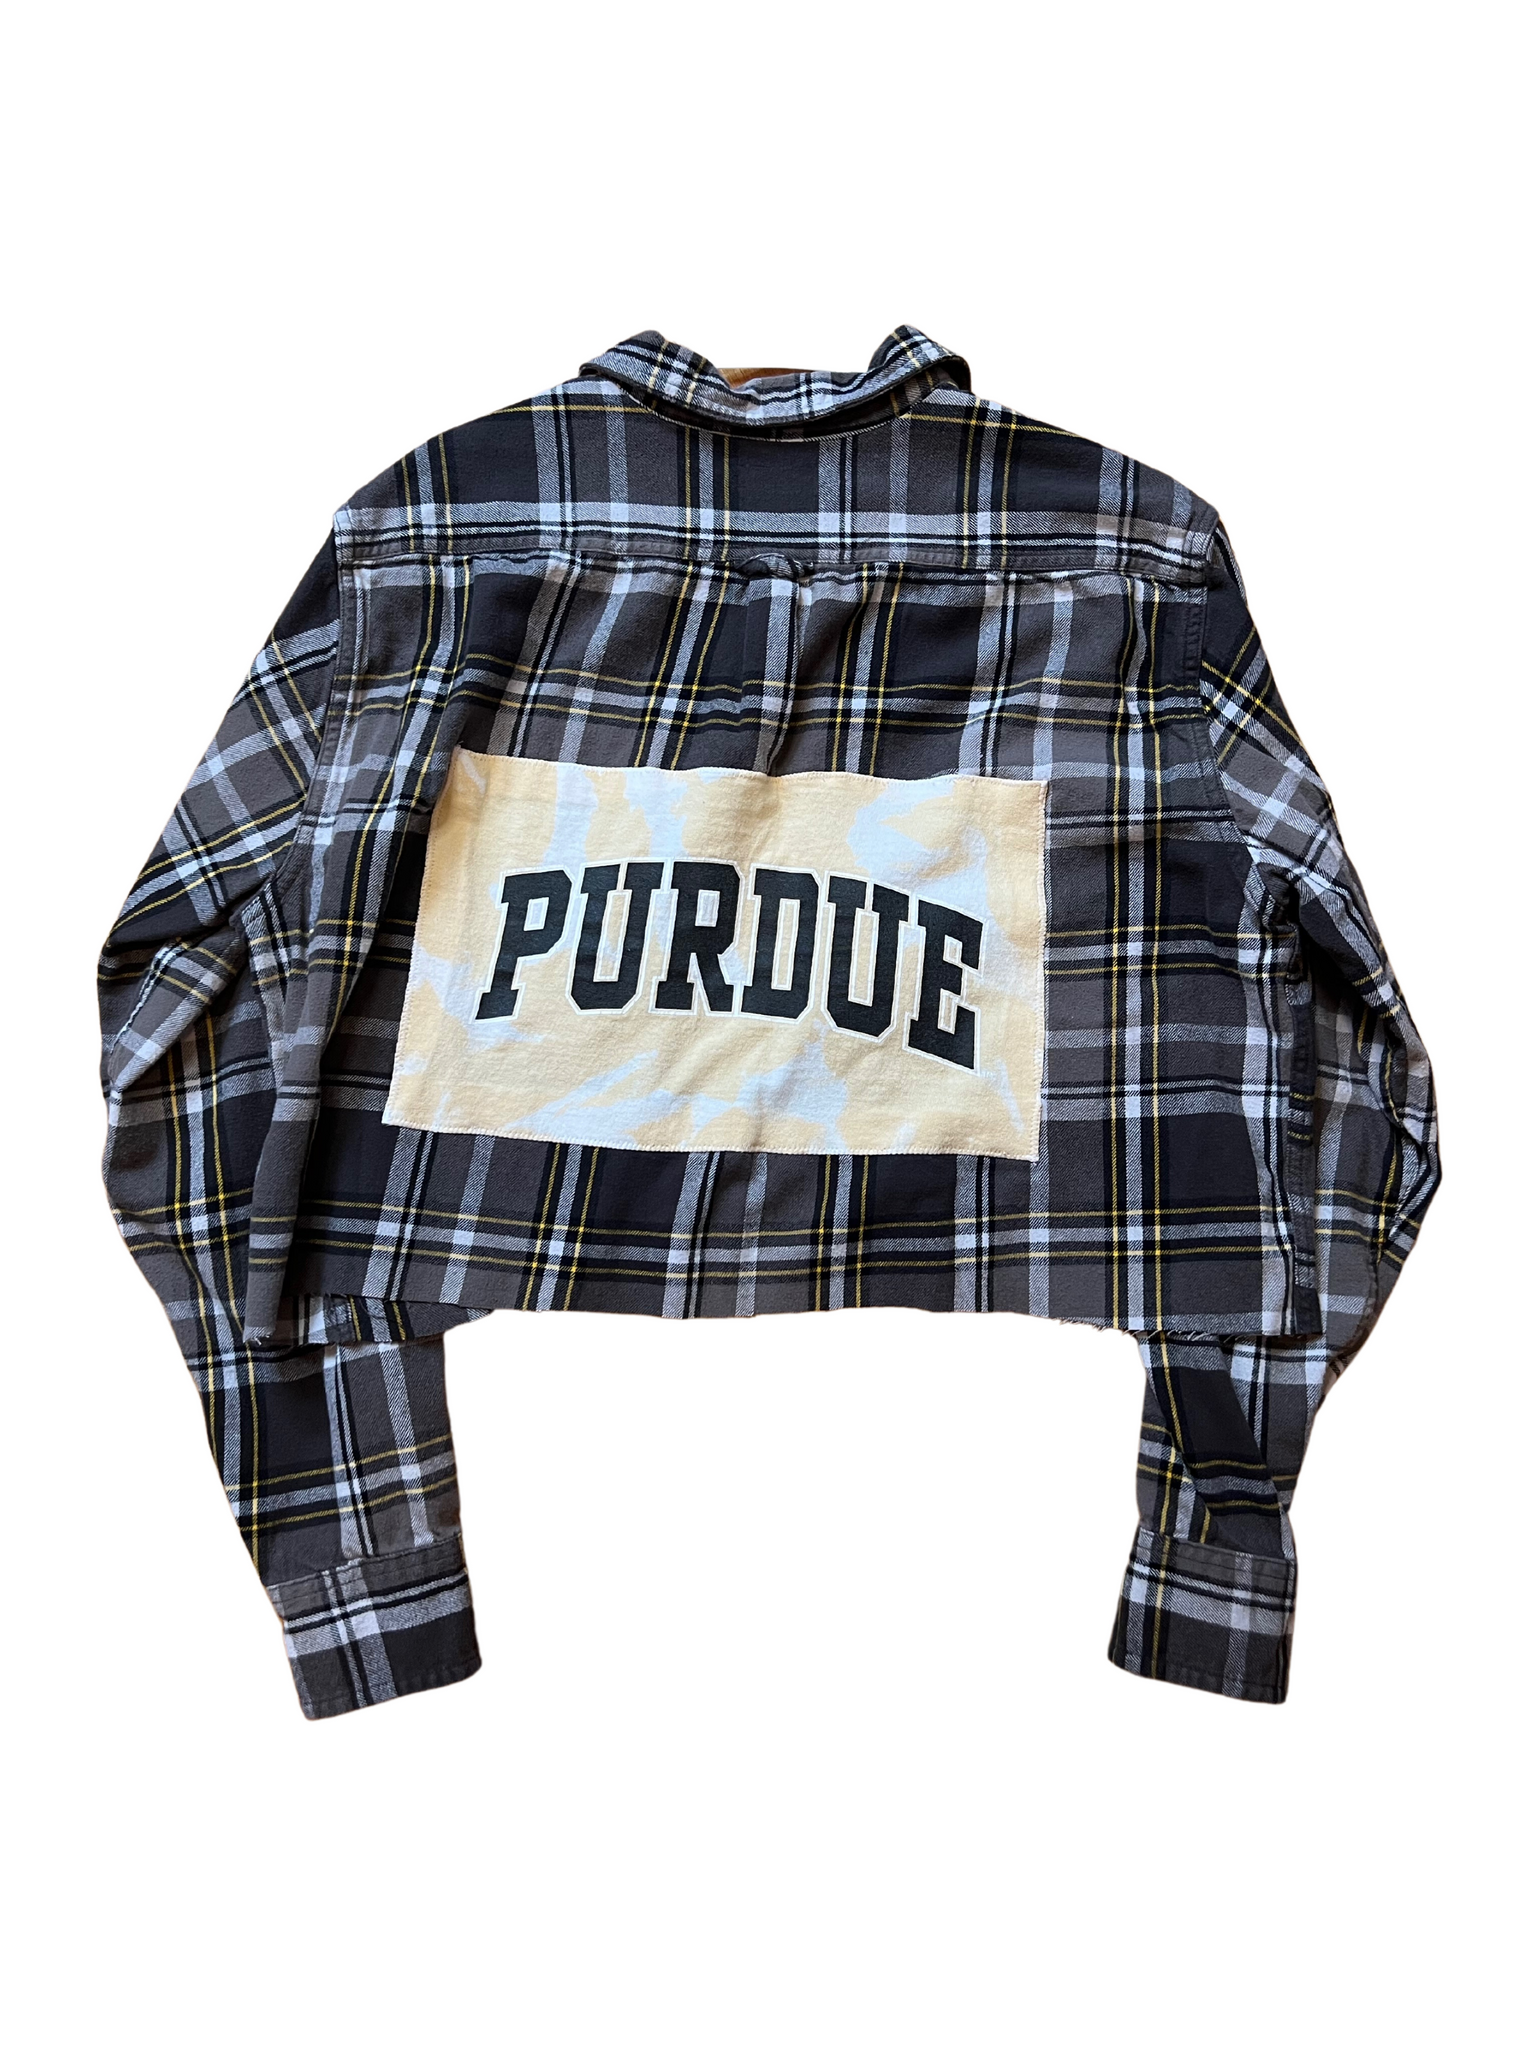 Purdue University Cropped Flannel